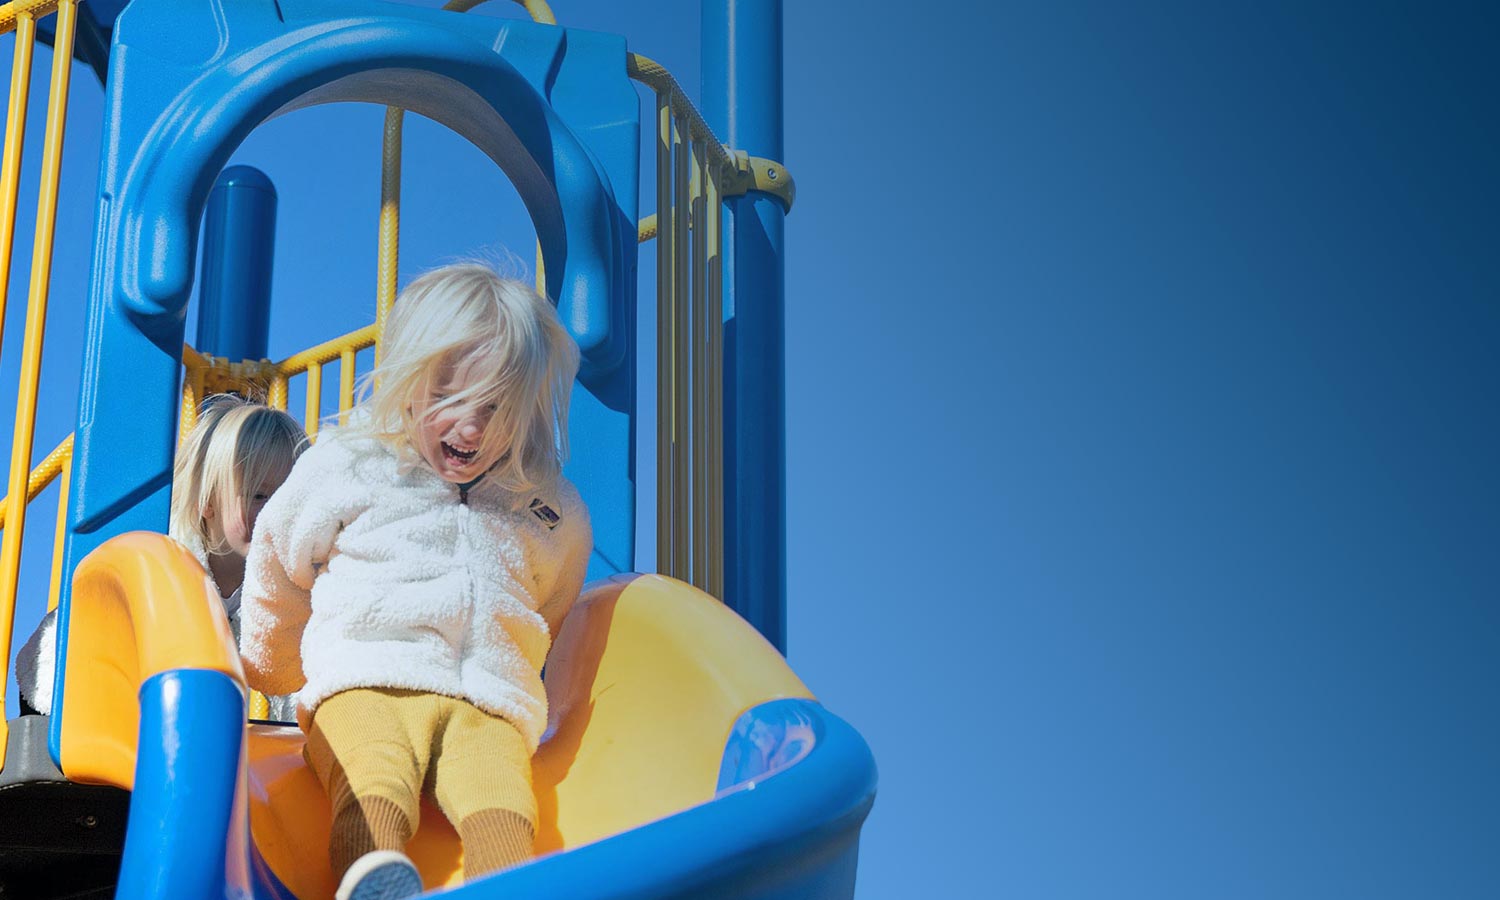 Playground Equipment. Girl Sliding down a slide at a park